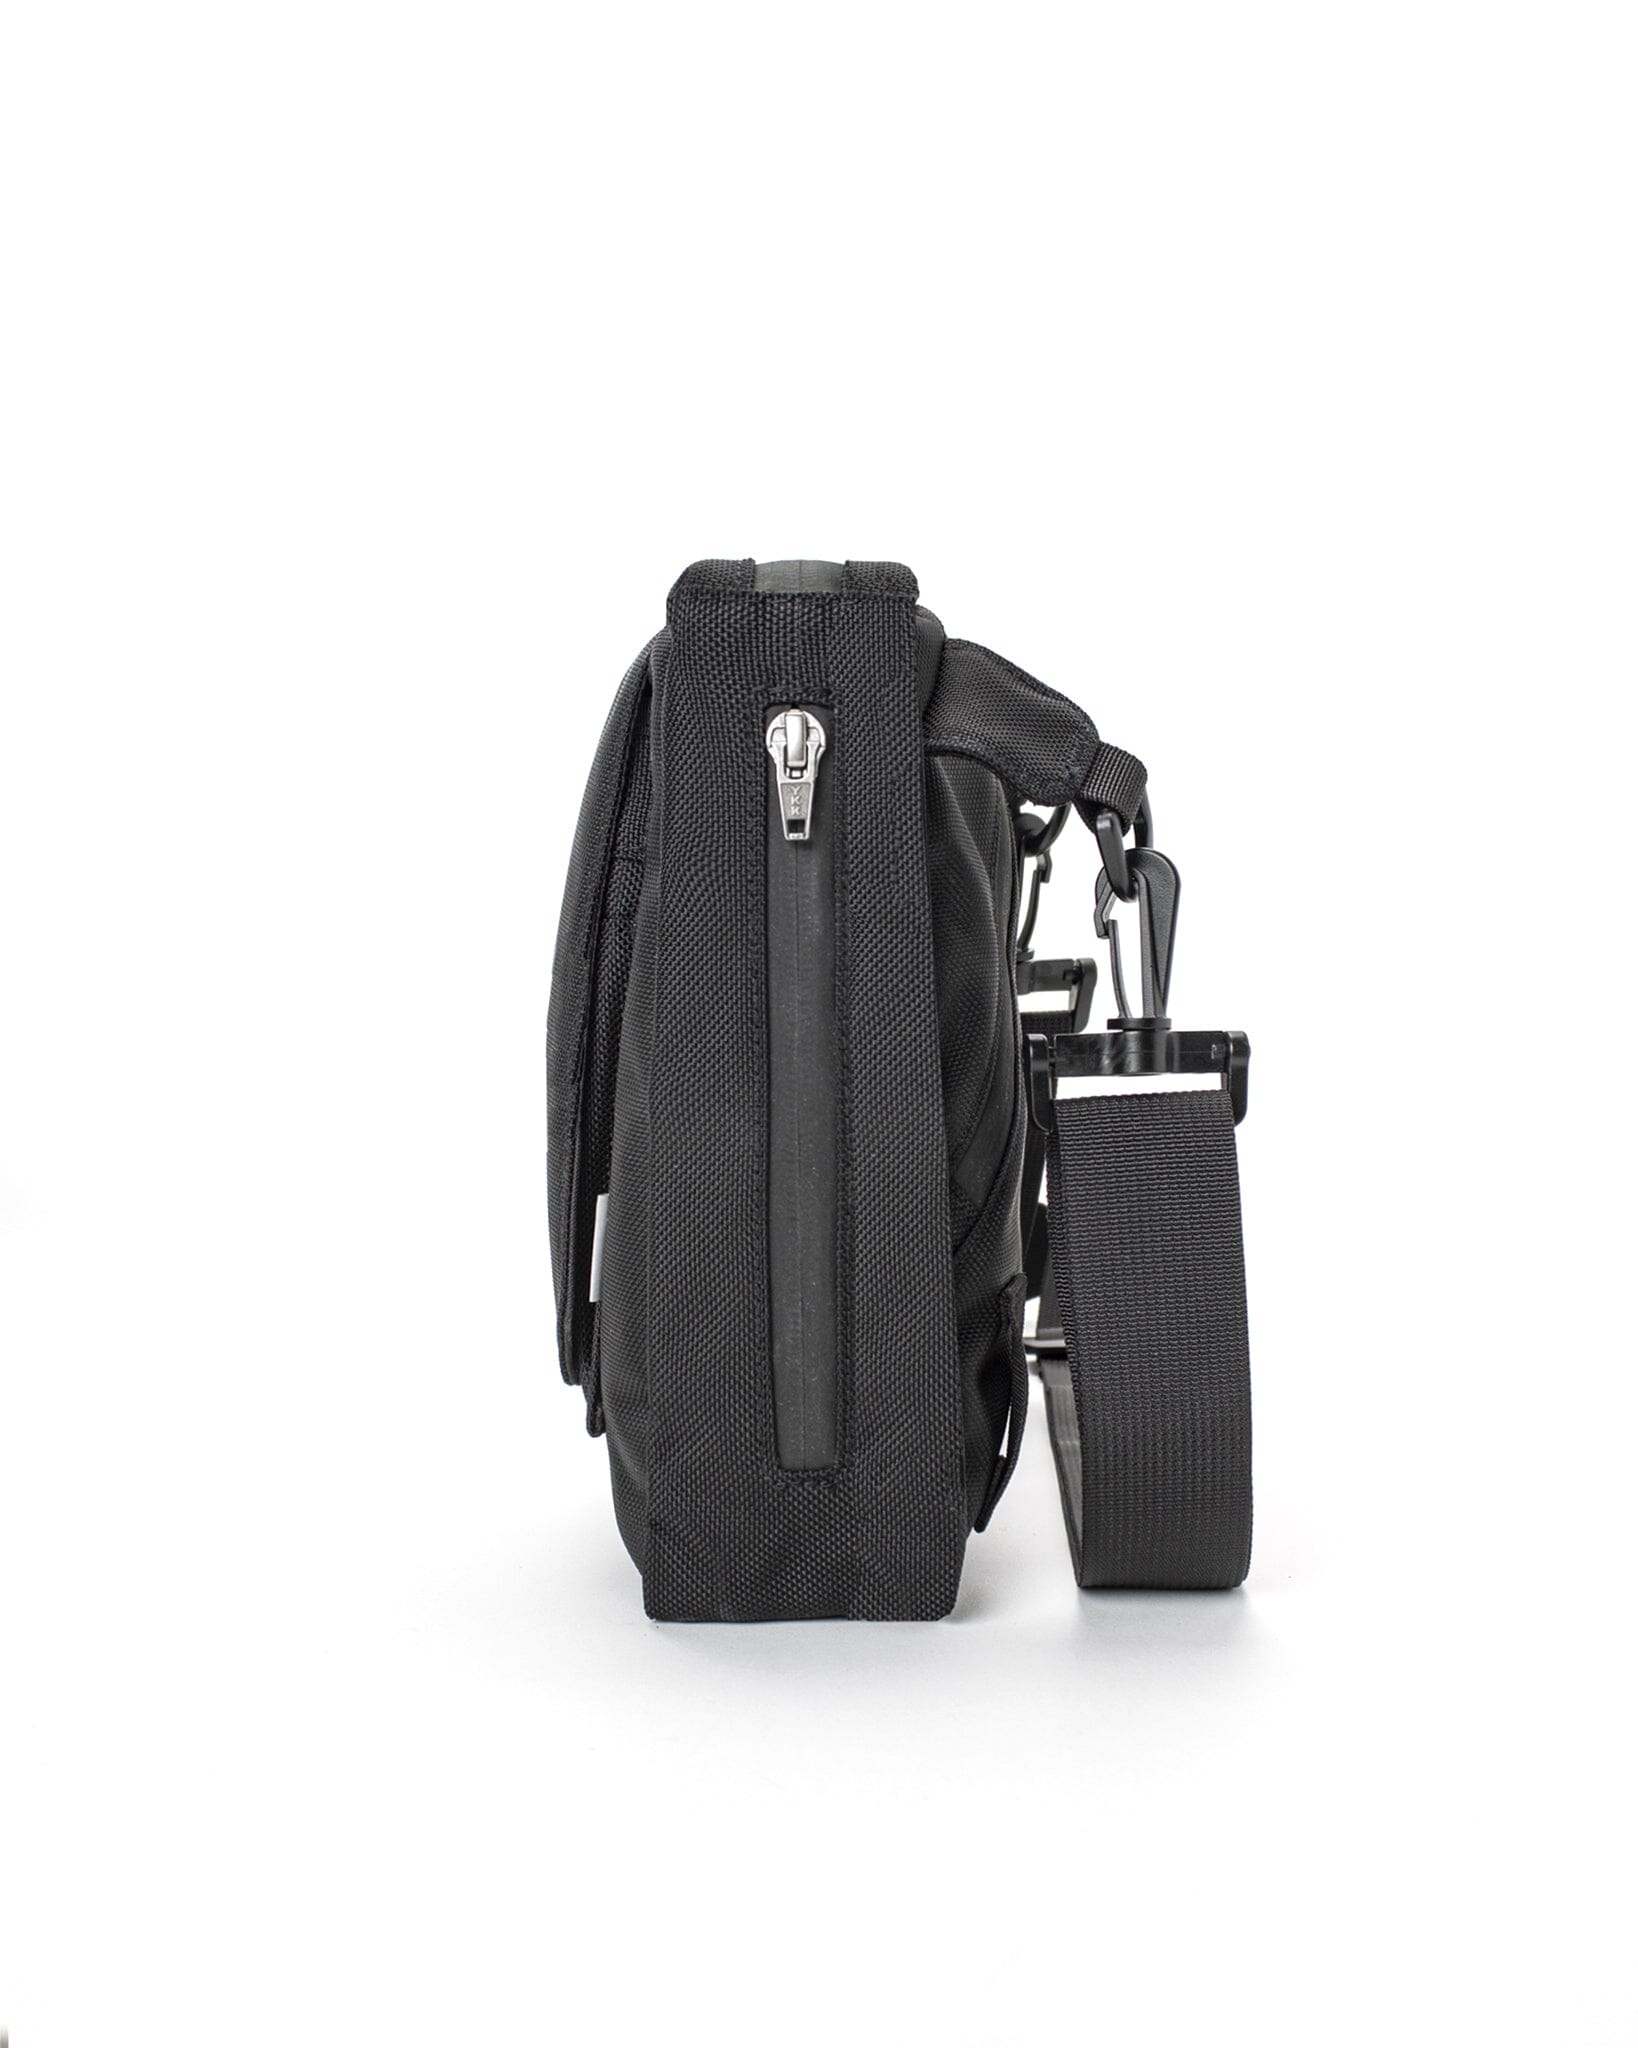 Small Carry - Stealth Bag bolstr   